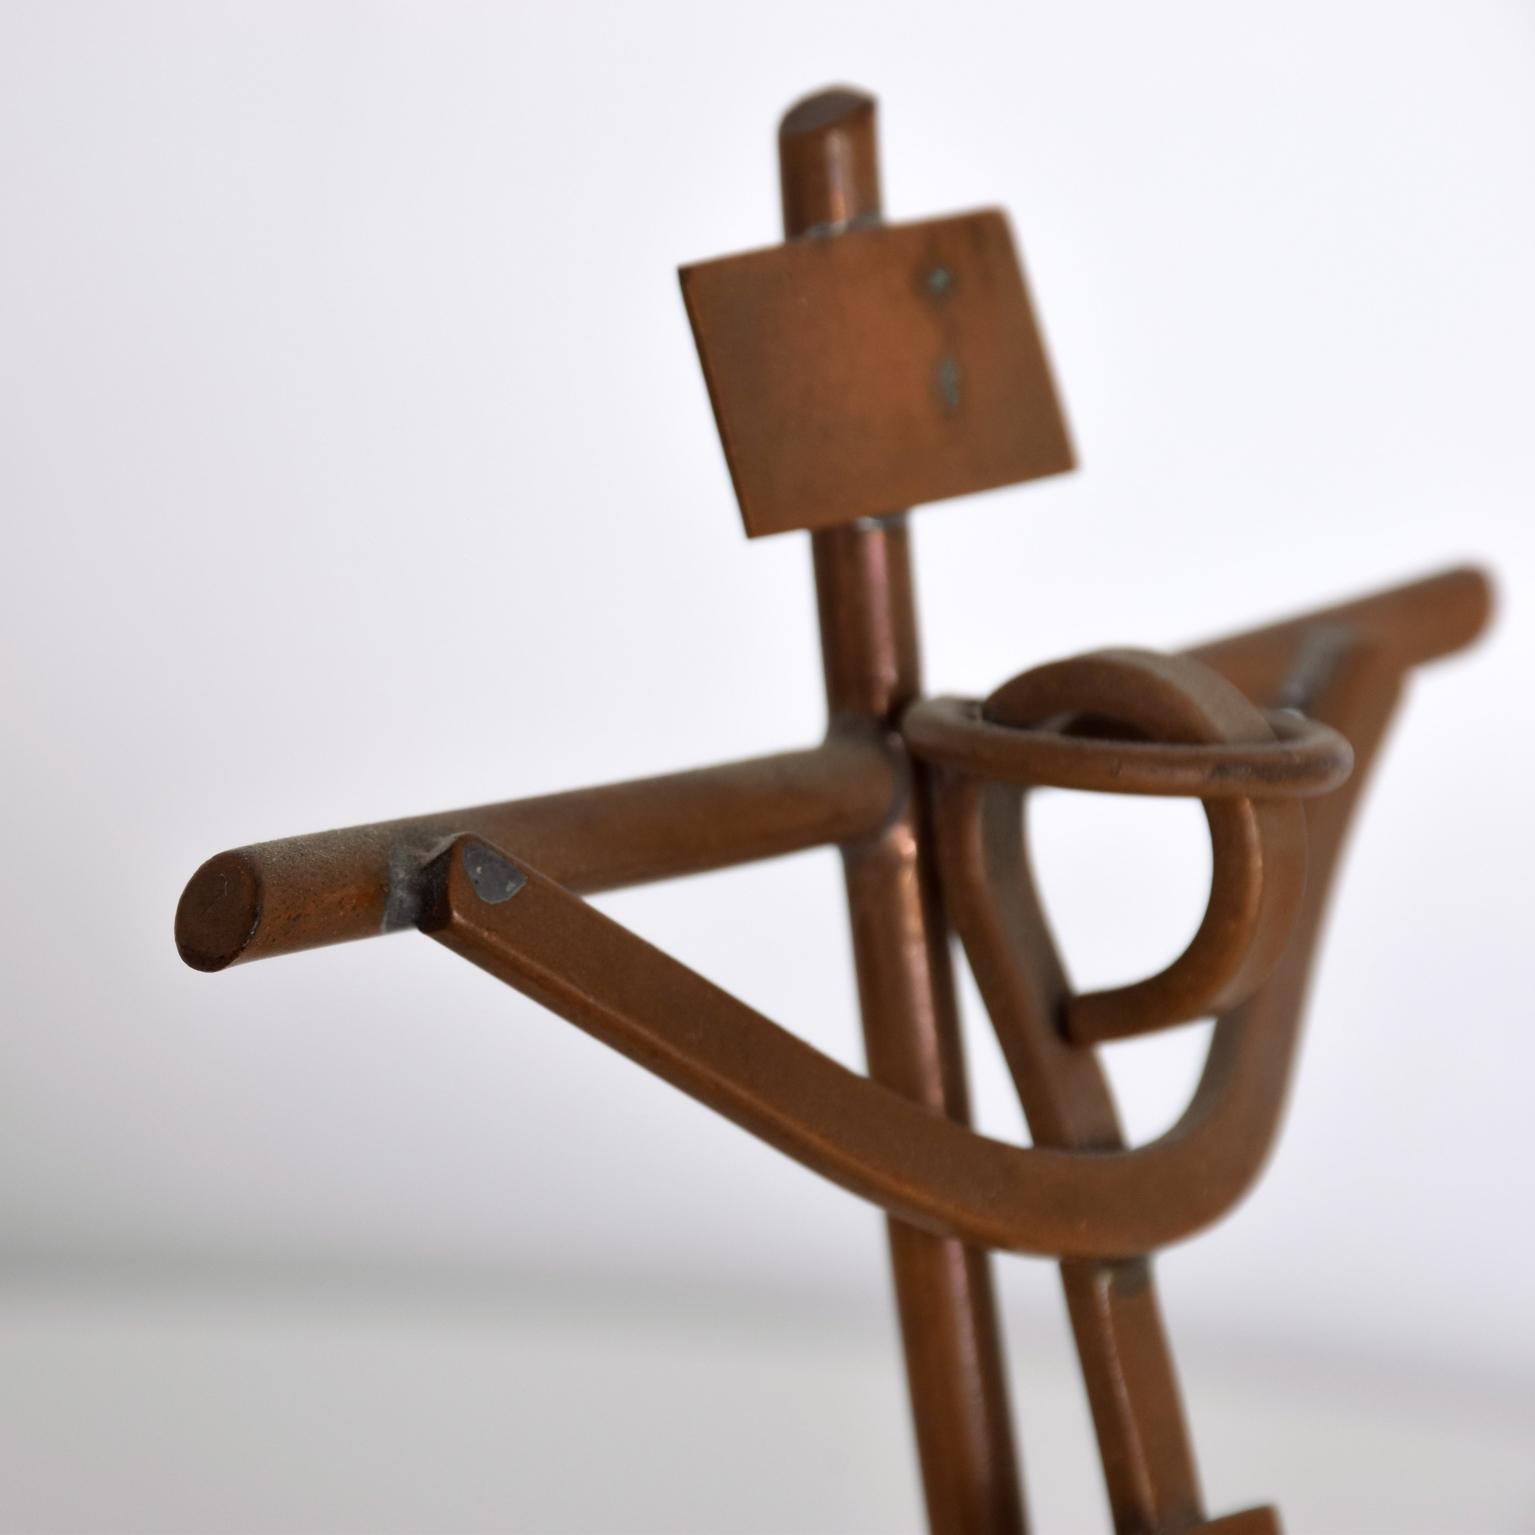 For your consideration: Mathias Goertiz cross sculpture designed in copper and silver
No COA
Dimensions are: 6 1/4